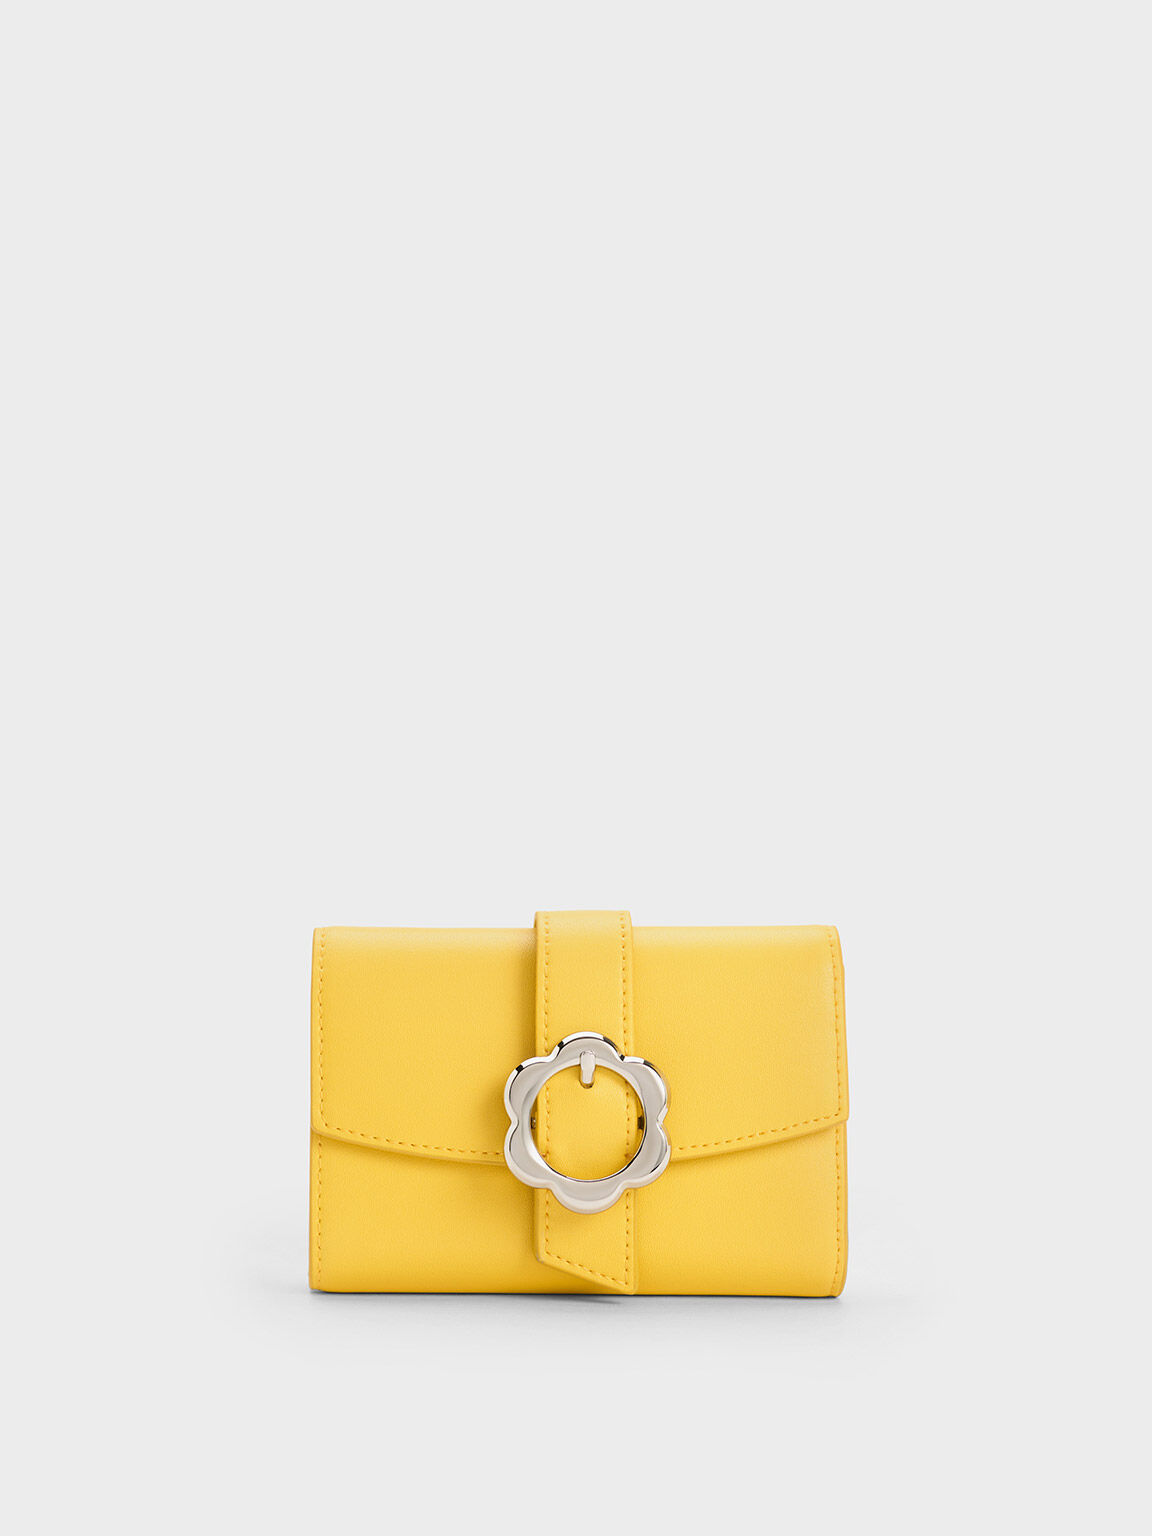 Petra Flower Buckle Wallet, Yellow, hi-res